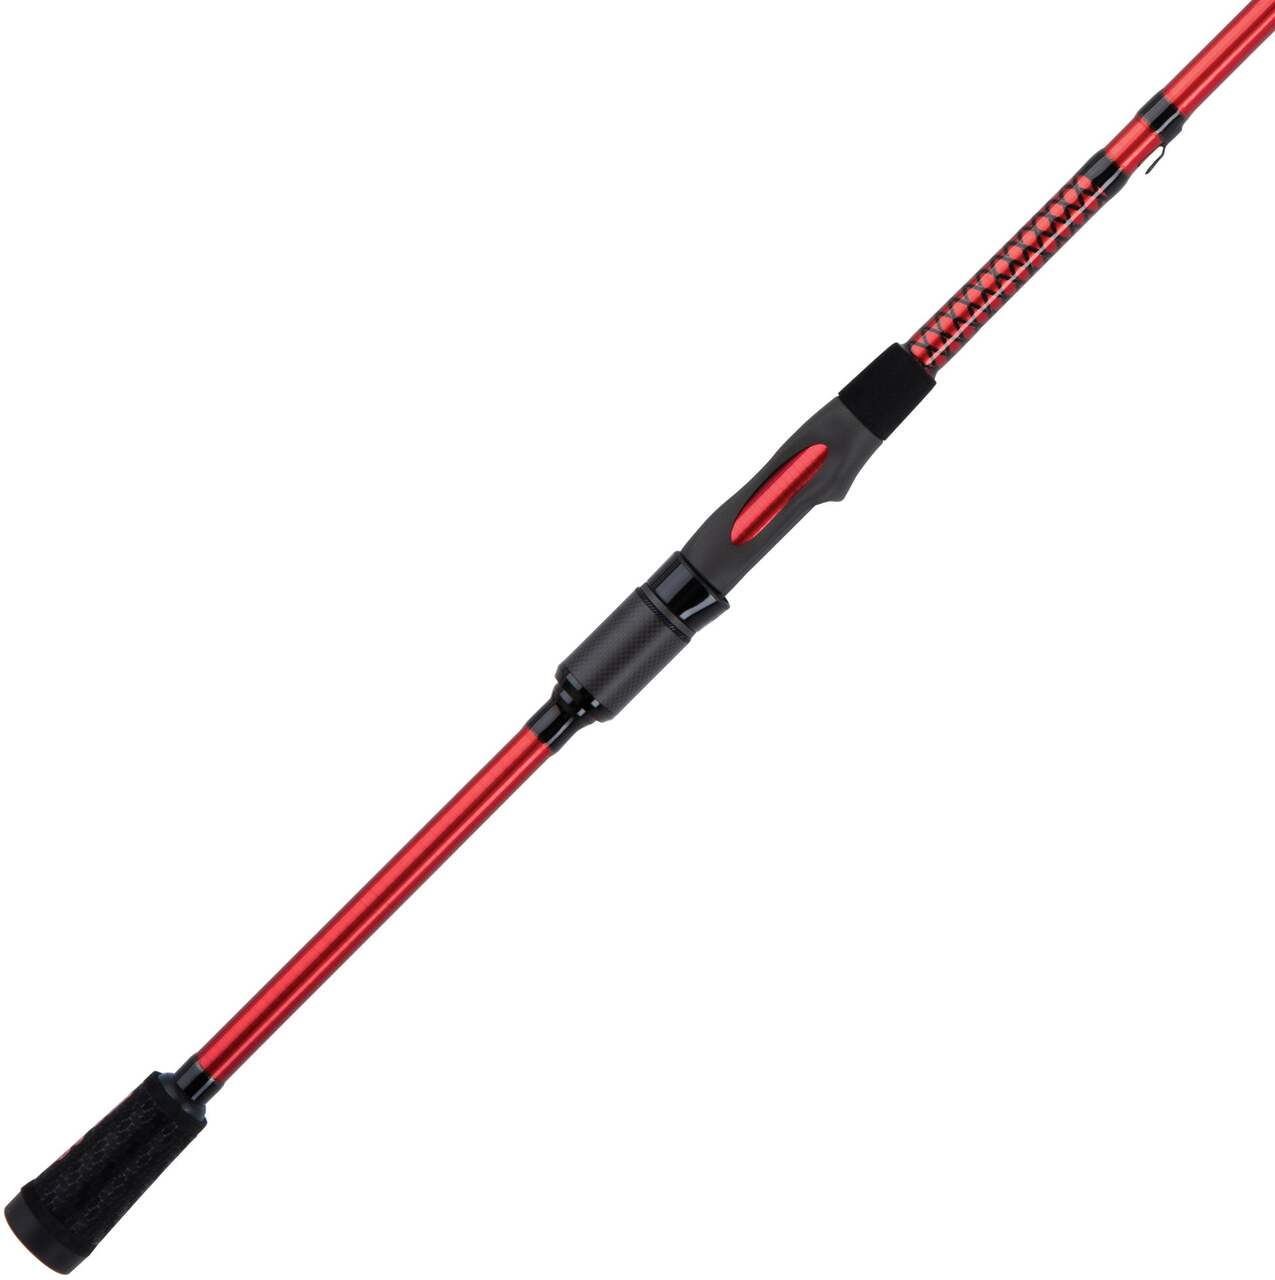 Ugly Stik Carbon Spinning Fishing Rods, Lightweight, Medium, 7-ft